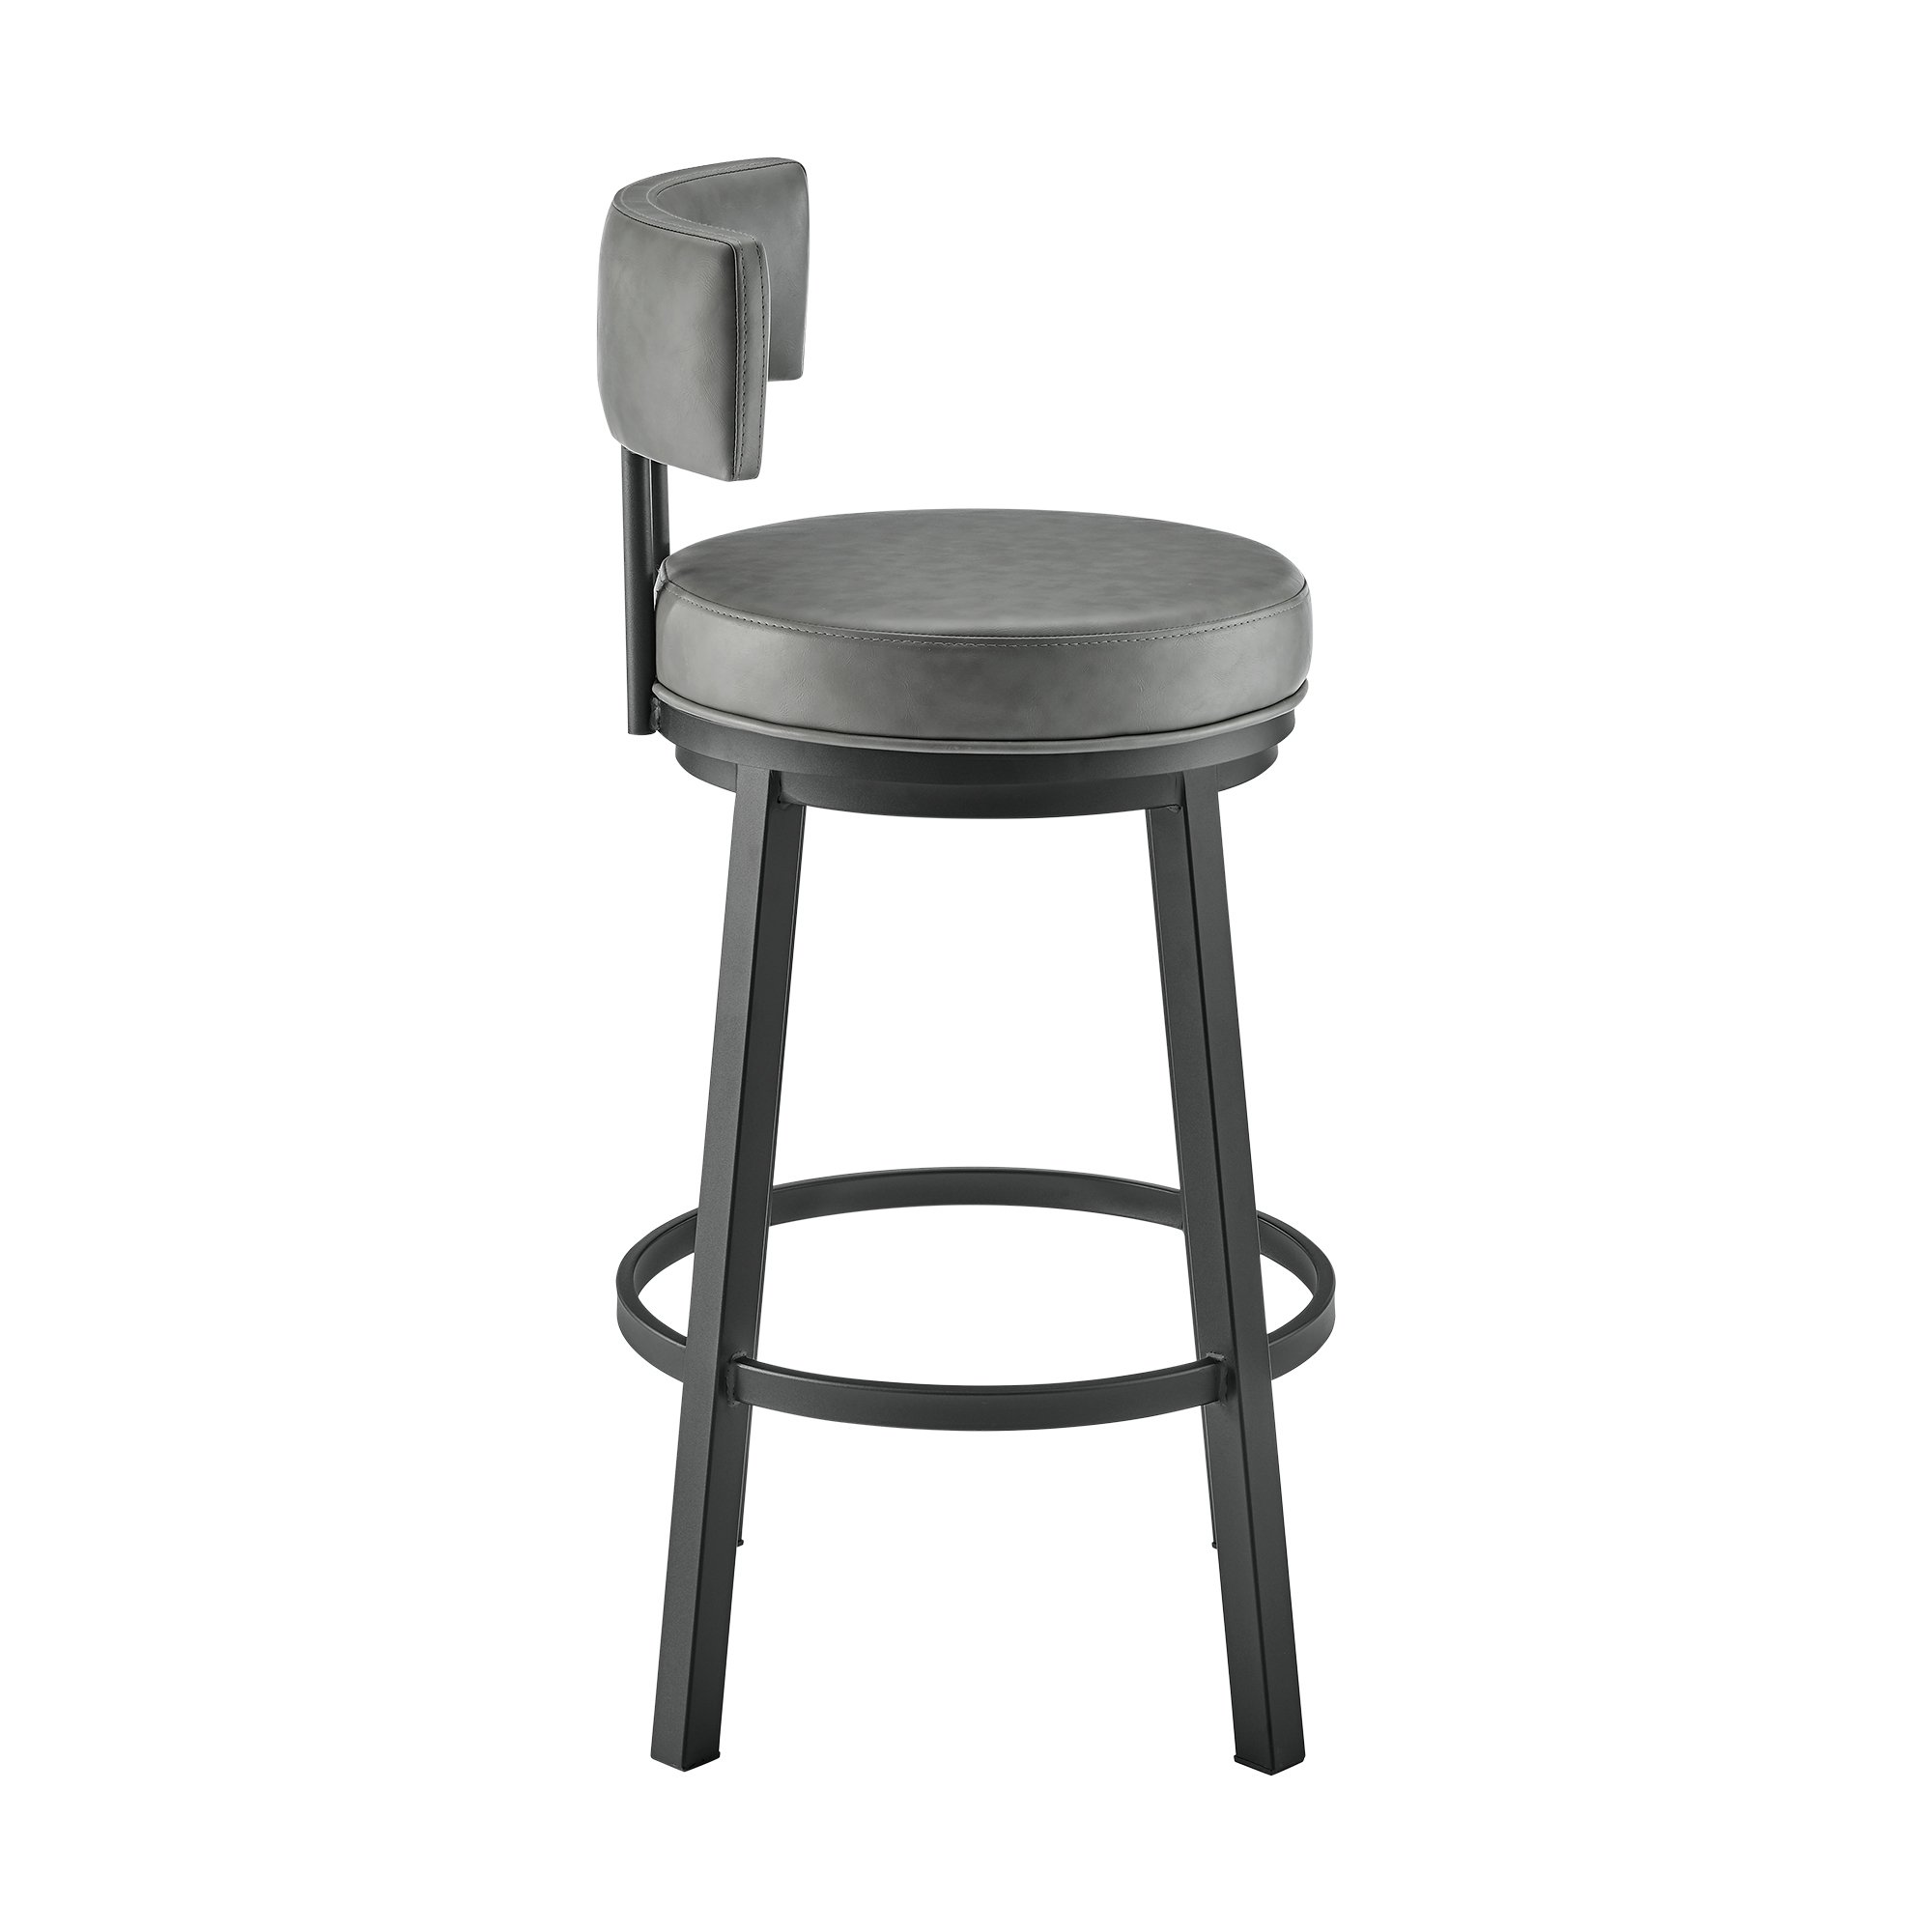 Eleanor 30 Inch Swivel Bar Stool Chair, Black, Round Gray Faux Leather Seat- Saltoro Sherpi